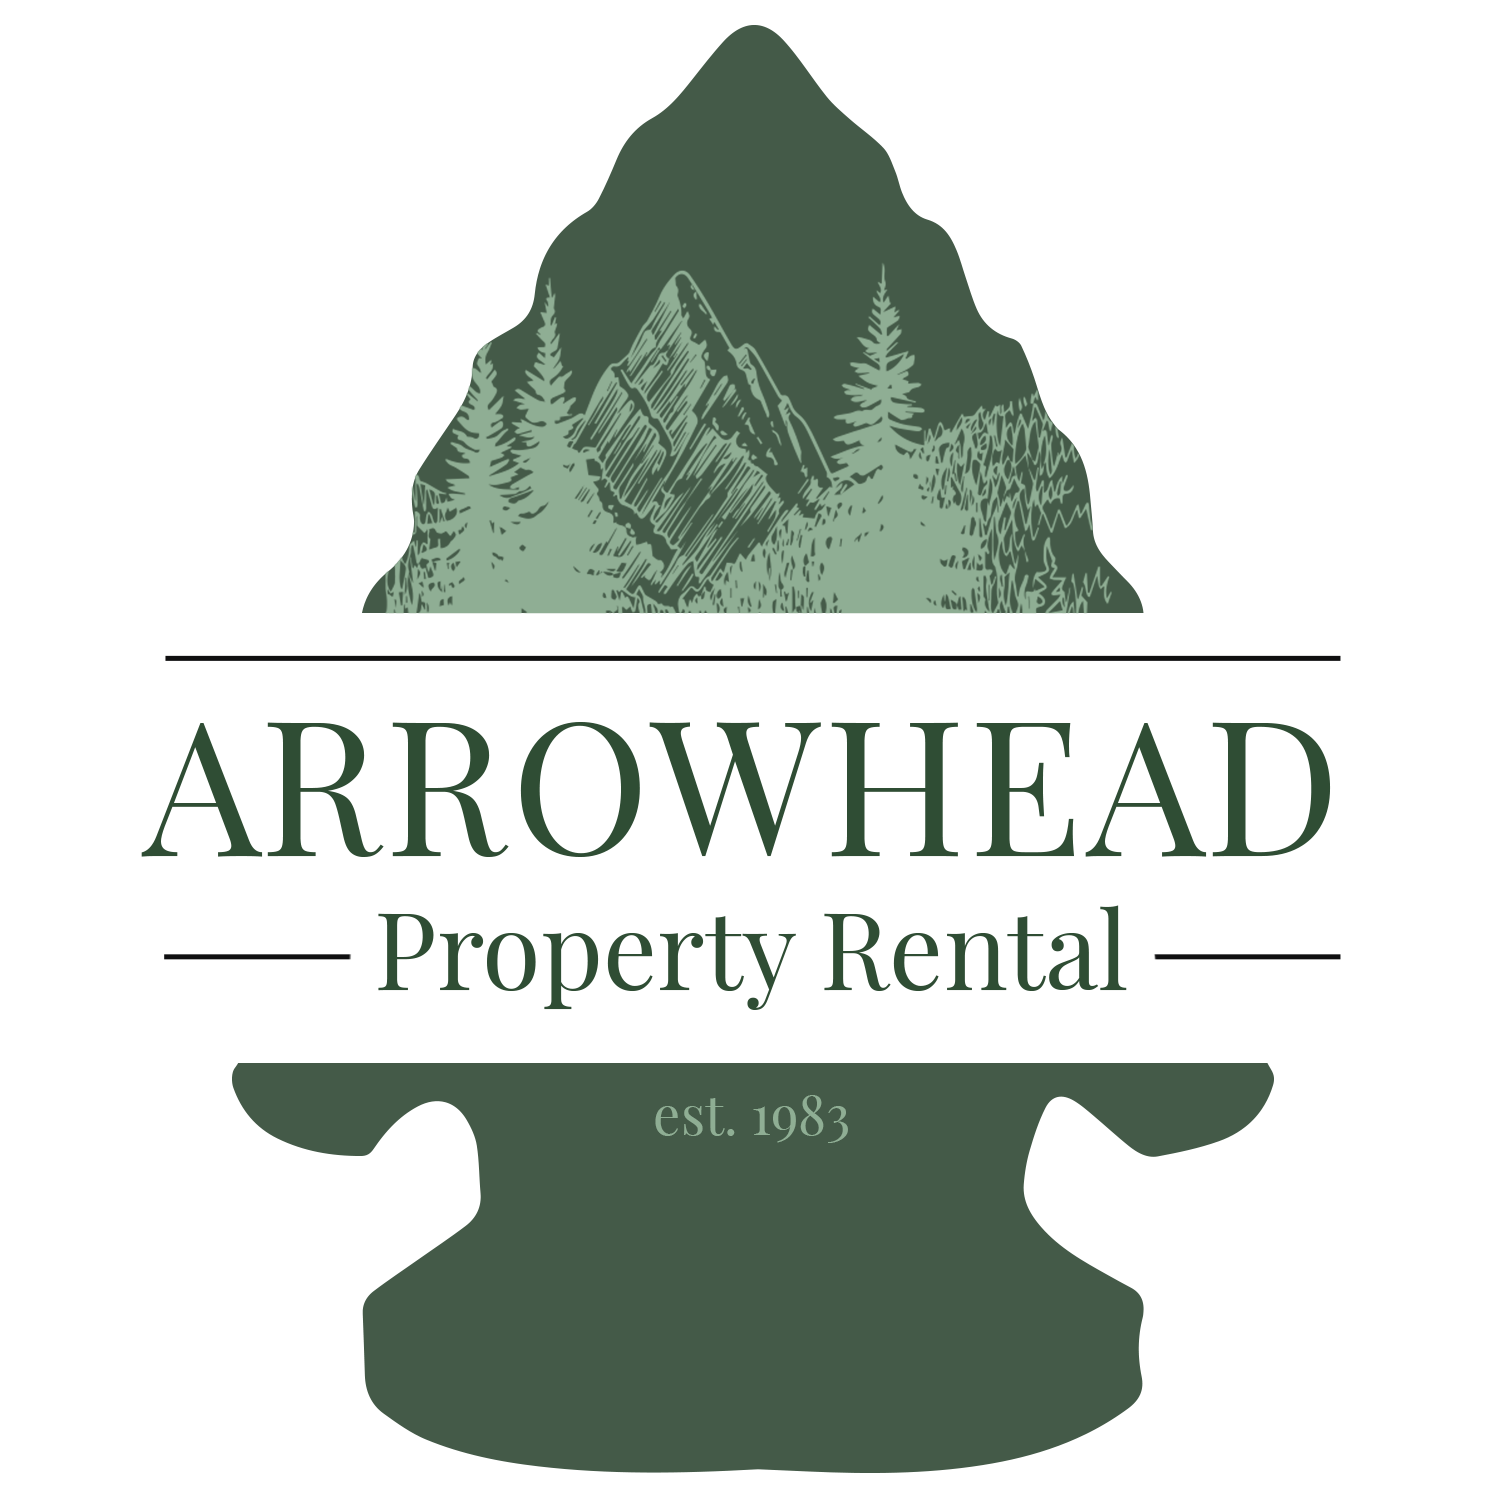 Arrowhead Property Rental - Lake Arrowhead, CA 92352 - (909)337-2403 | ShowMeLocal.com